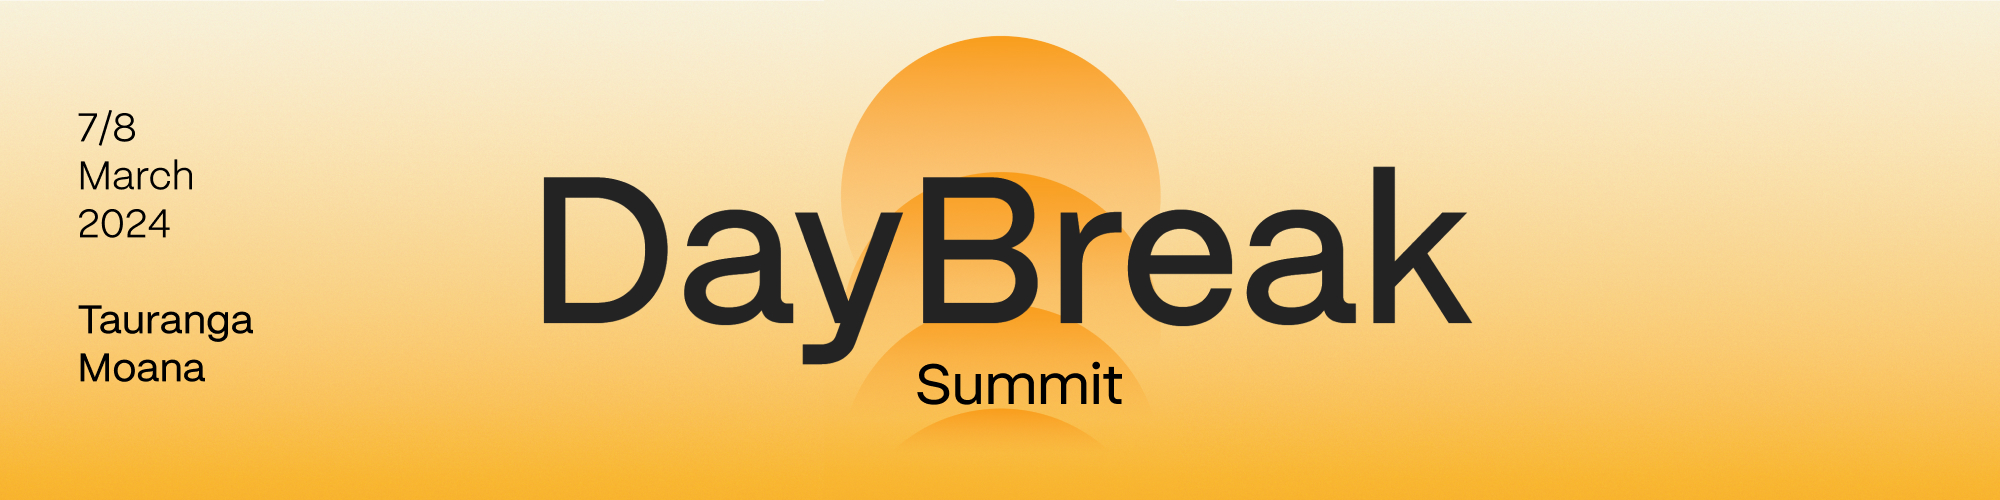 DayBreak Summit logo, 7-8 March 2024, Tauranga Moana